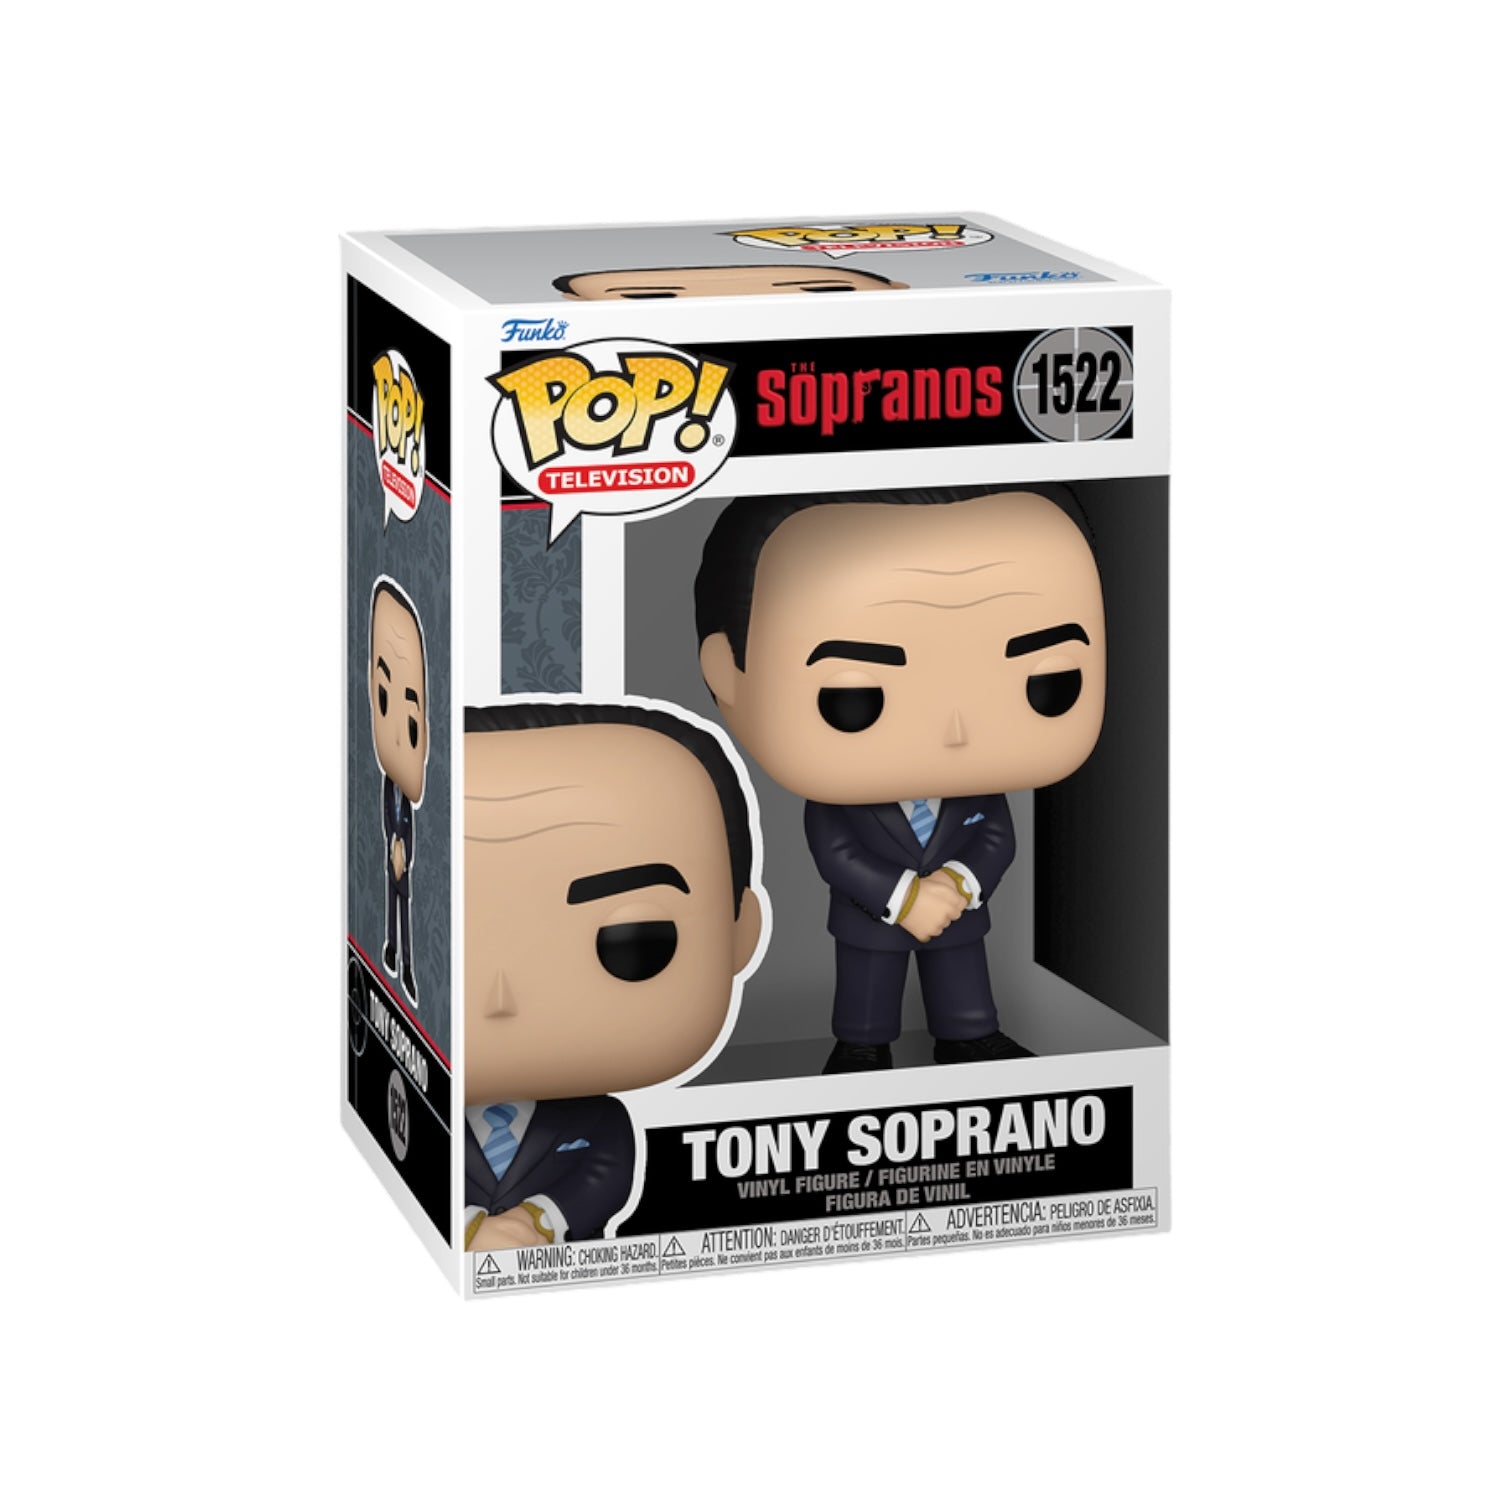 Tony Soprano #1522 Funko Pop! - Sopranos - PREORDER